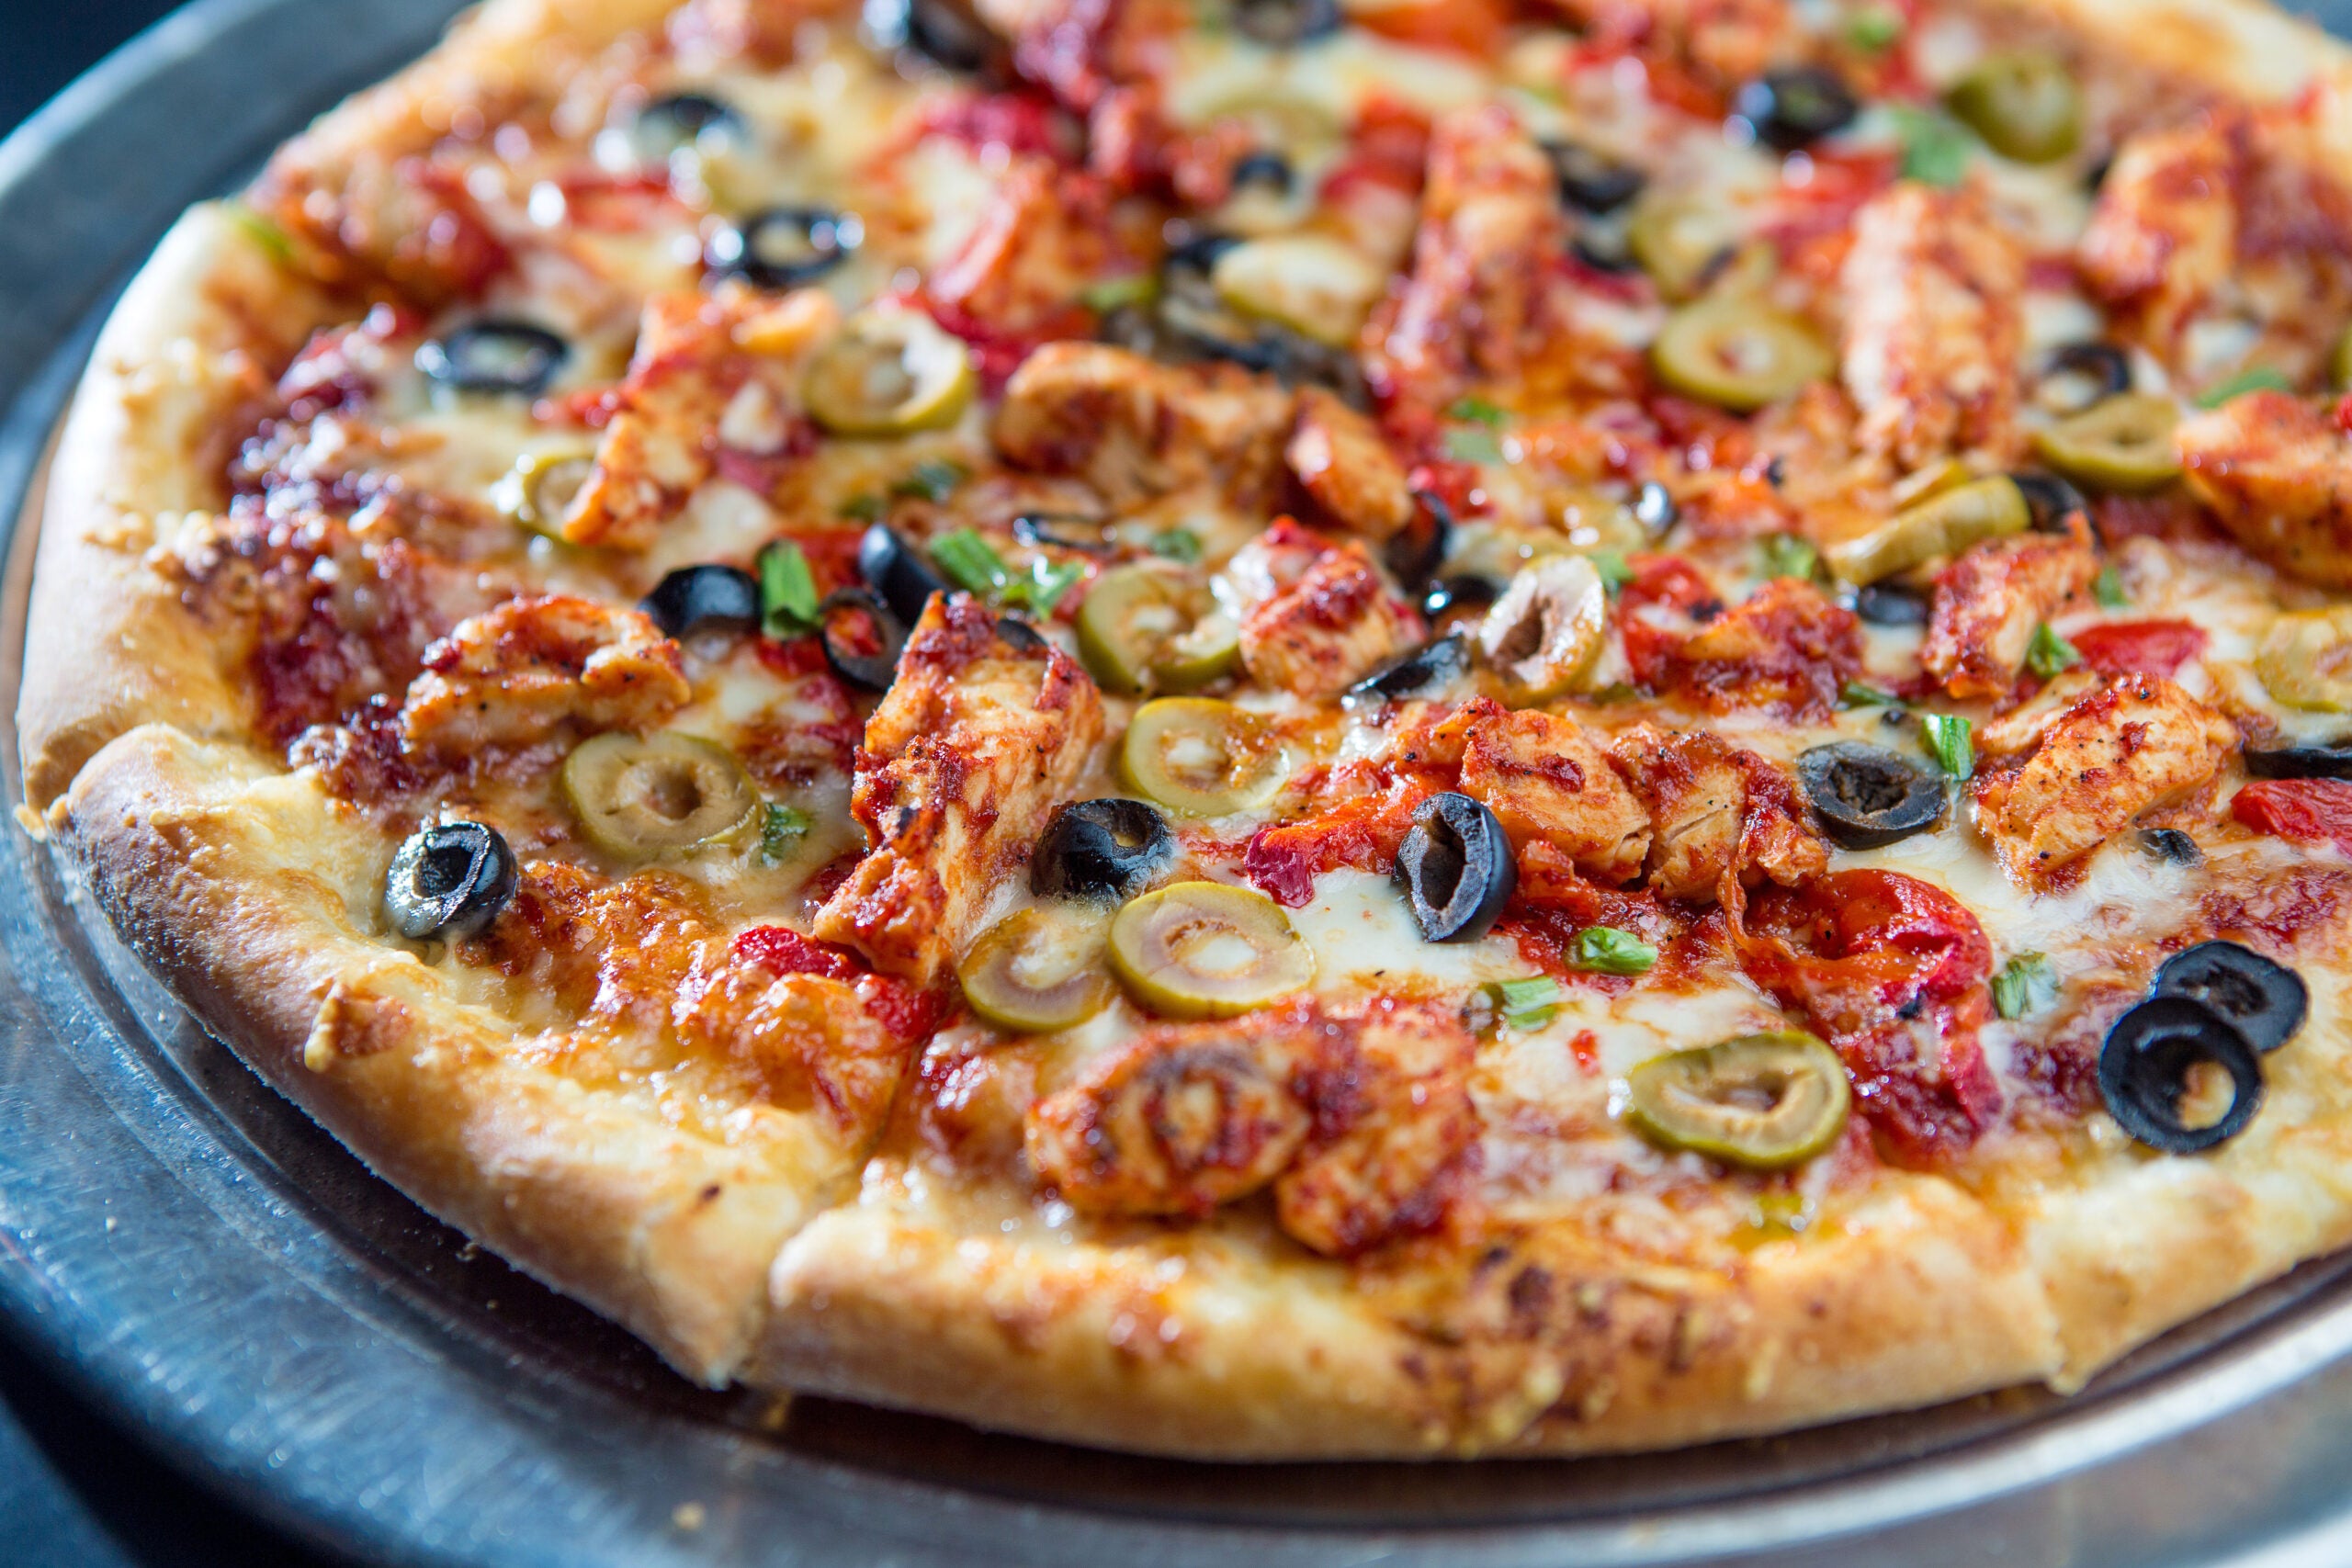 IV. Pizza's Evolution into a Comfort Food